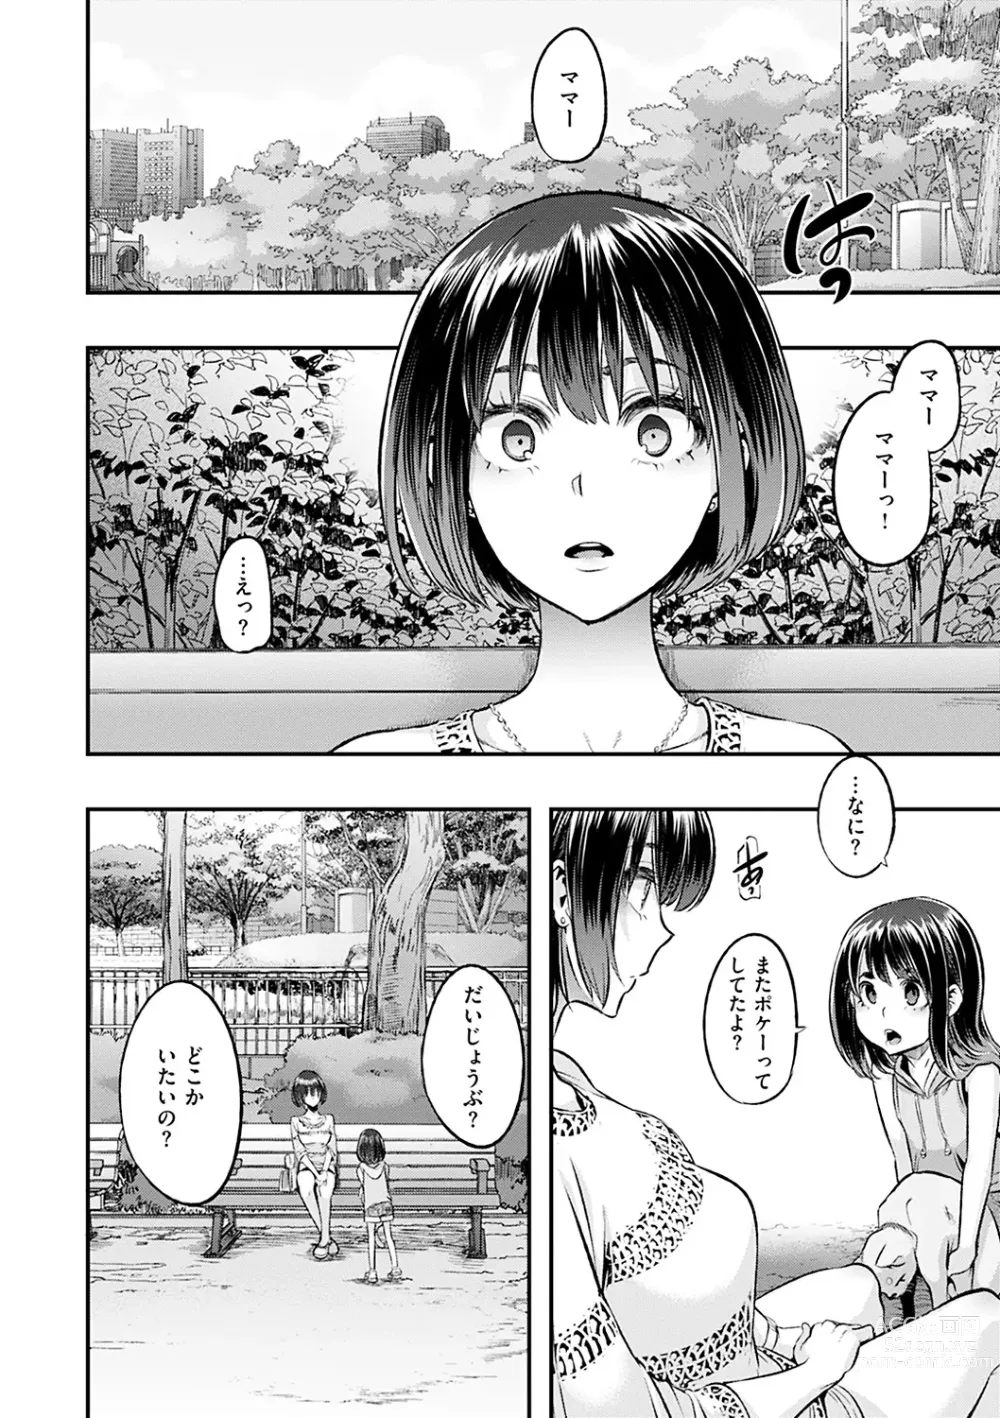 Page 241 of manga Emergence